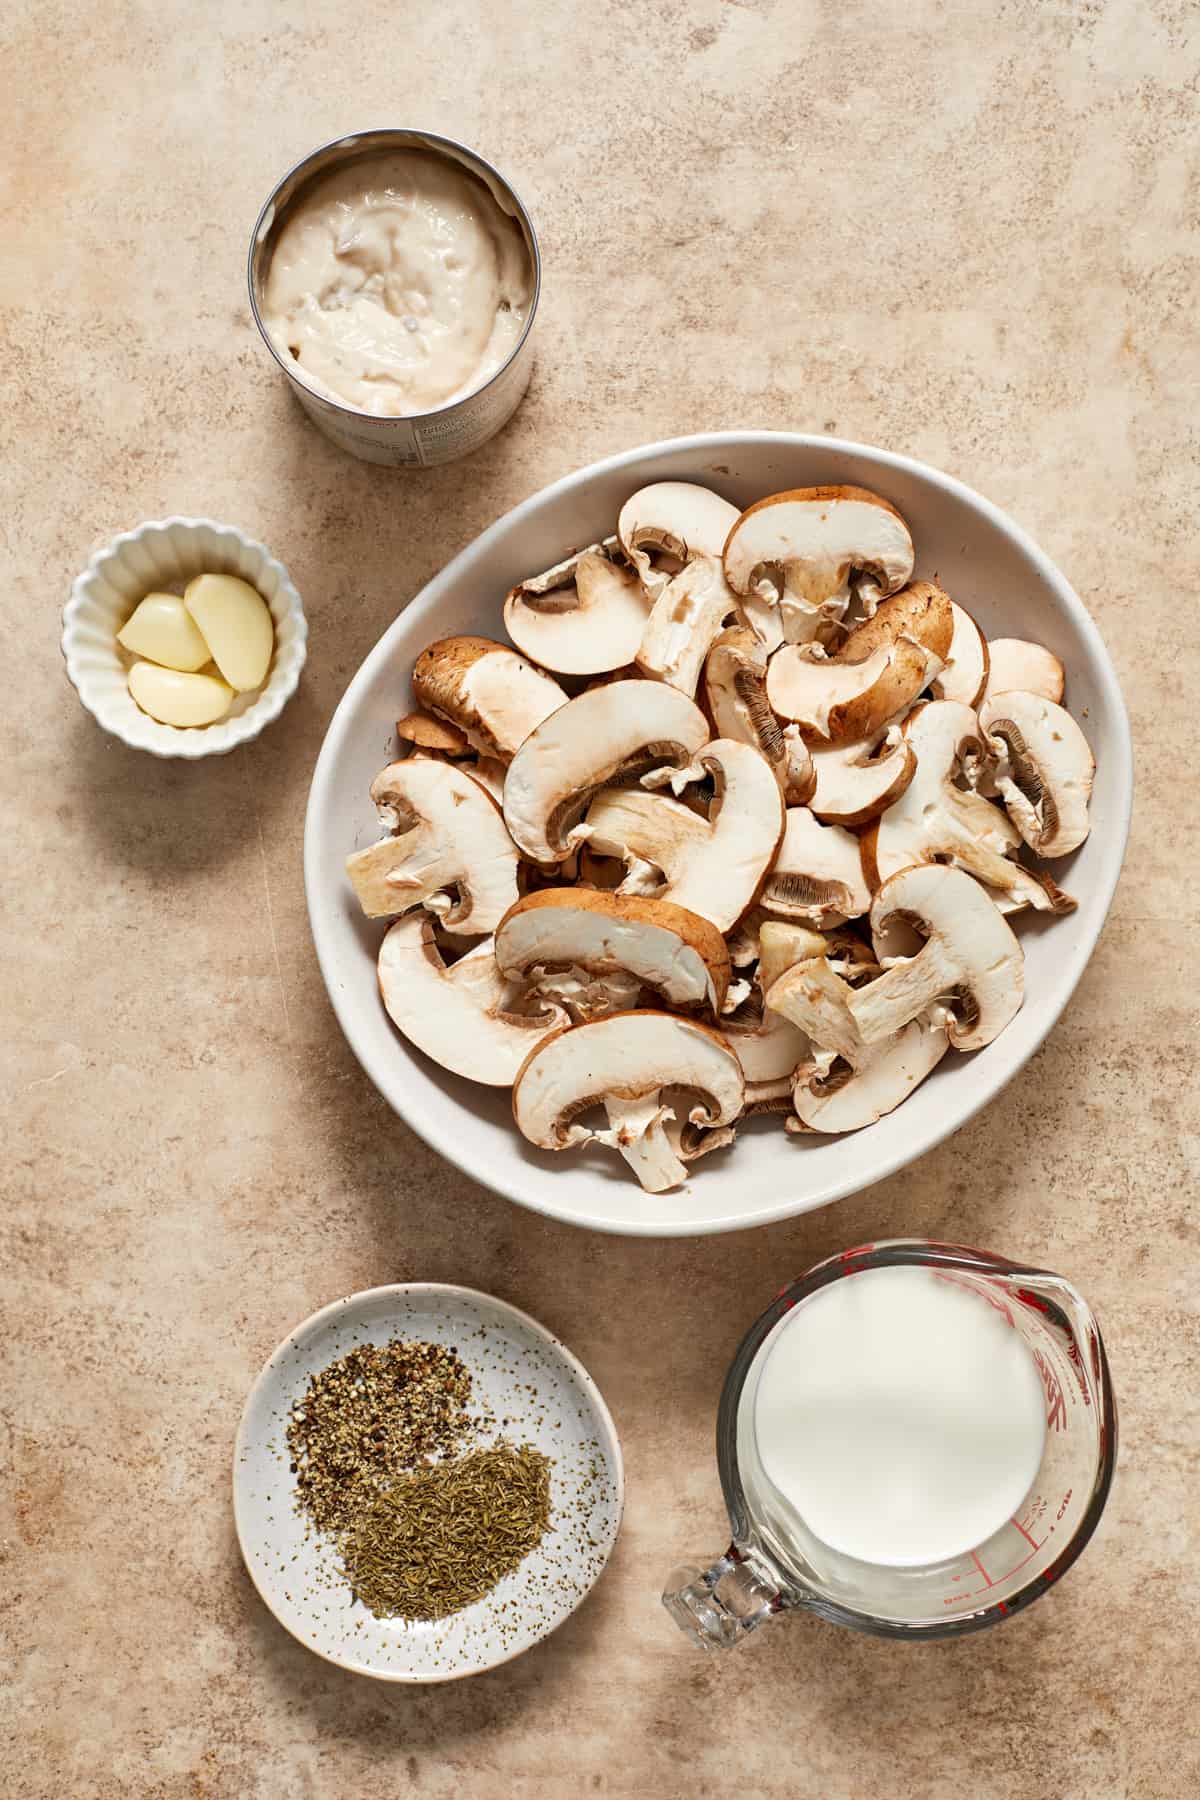 Ingredients to make creamy mushroom sauce on surface.